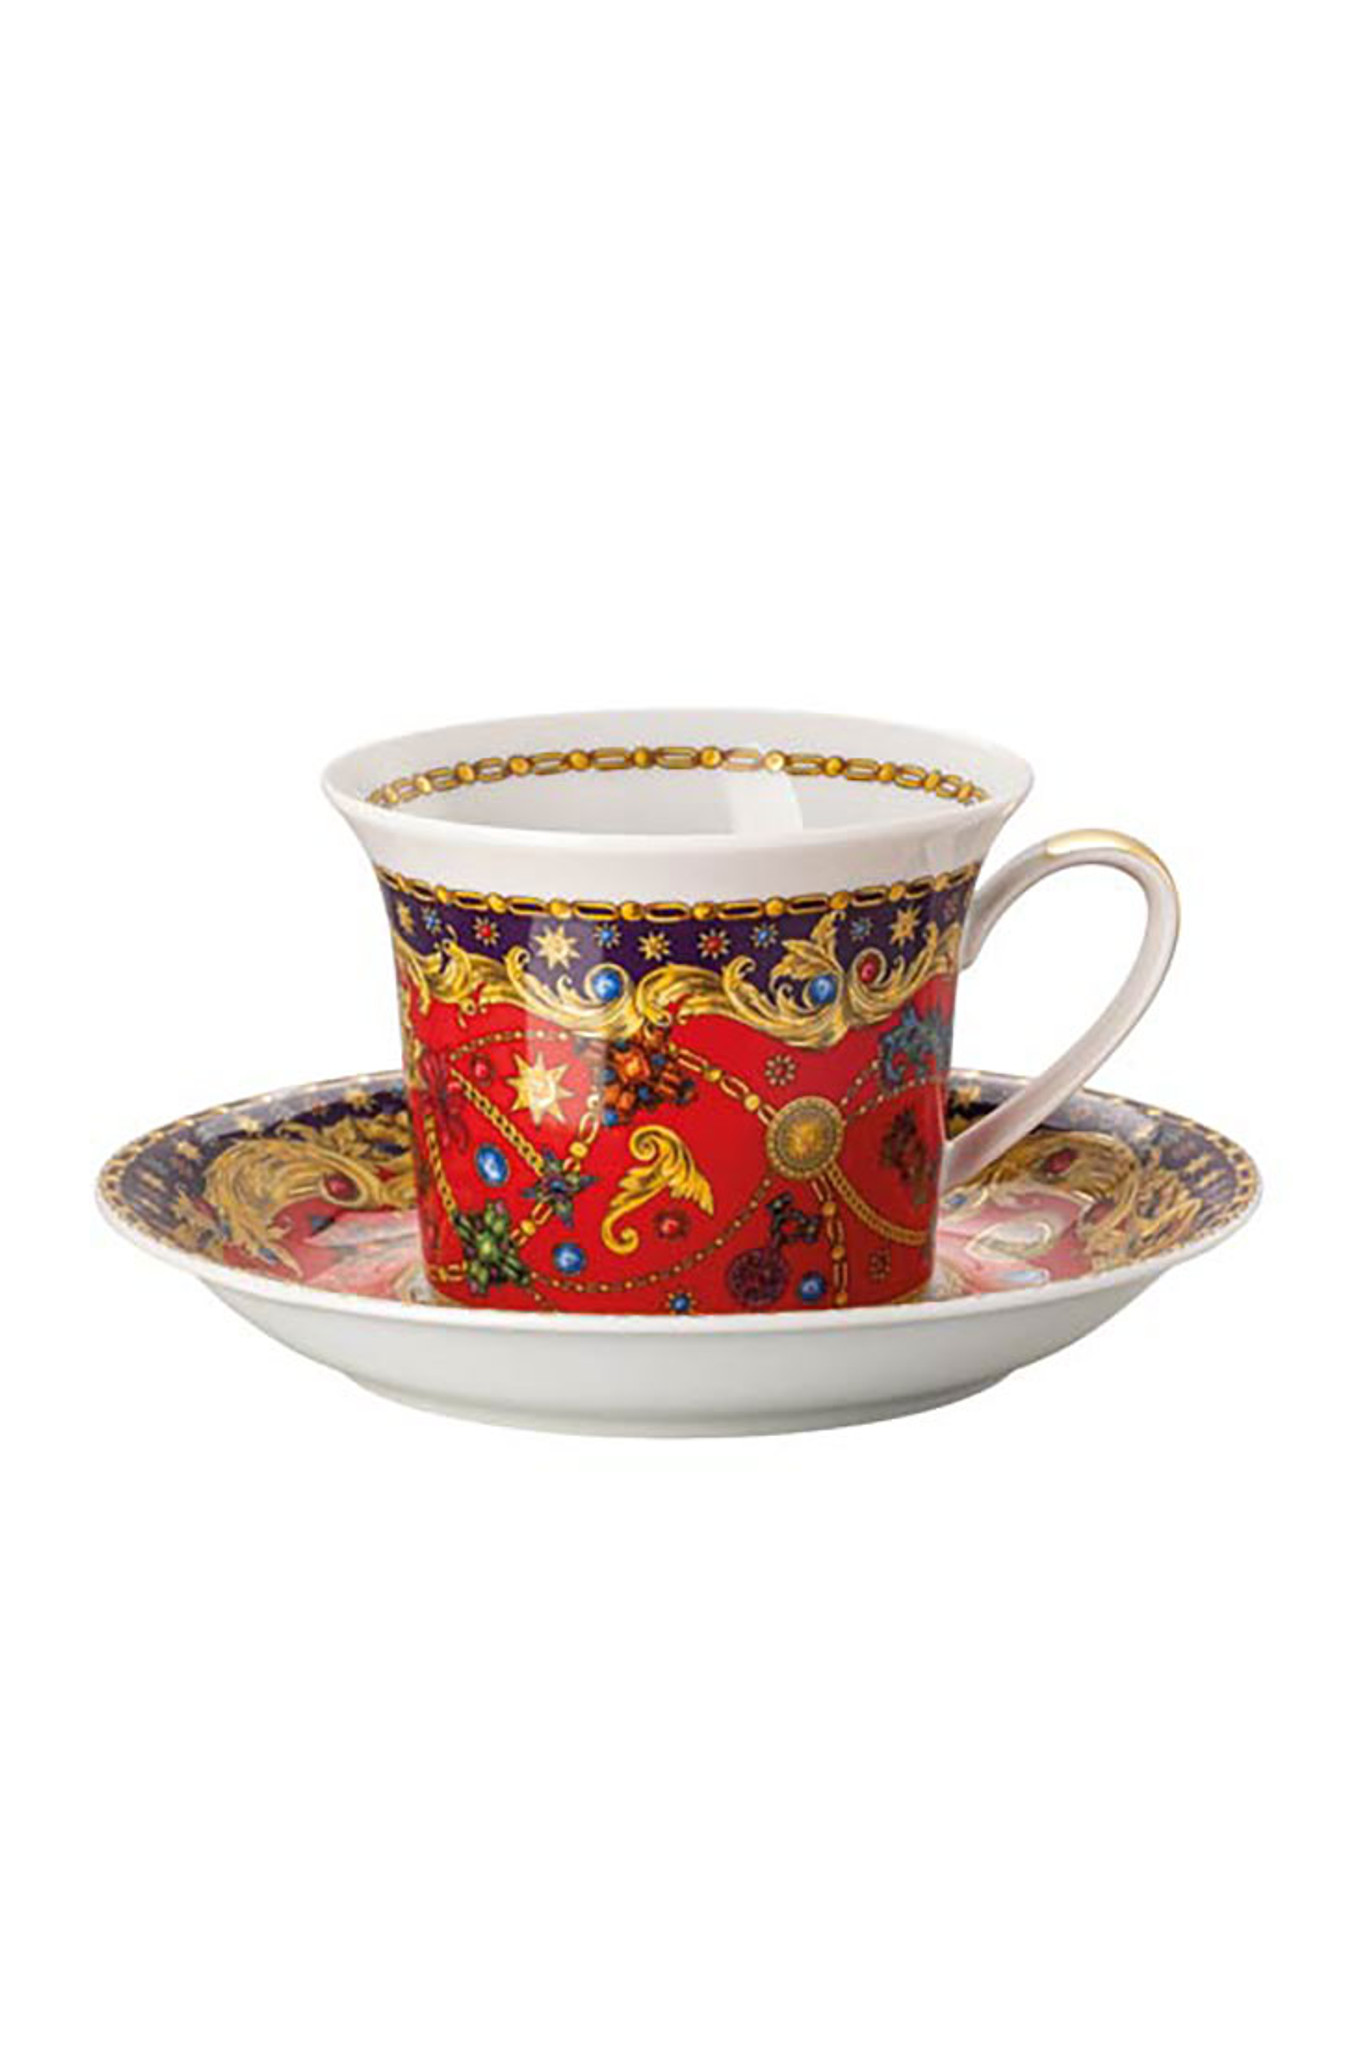 versace-barocco-holiday-cappuccino-cup-saucer-6-inch-8-oz-19315-409948-14765.jpg